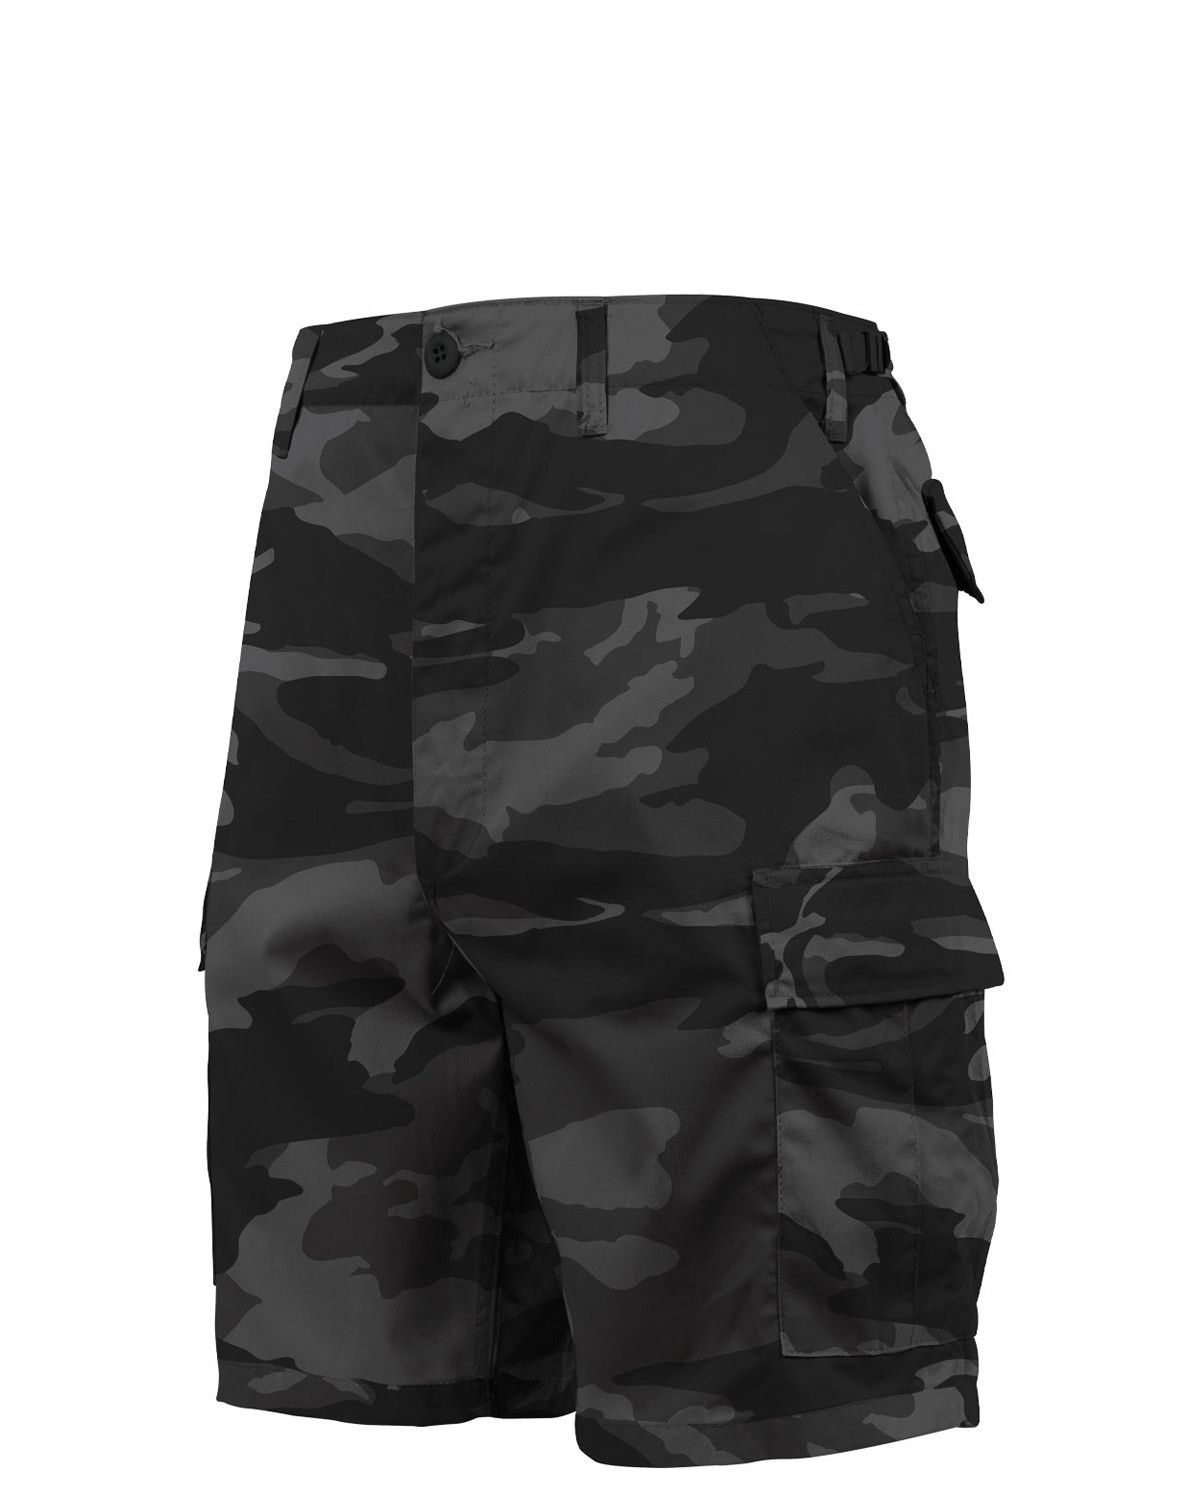 11: Rothco BDU Shorts (Black Camo, Large / 35"-43")